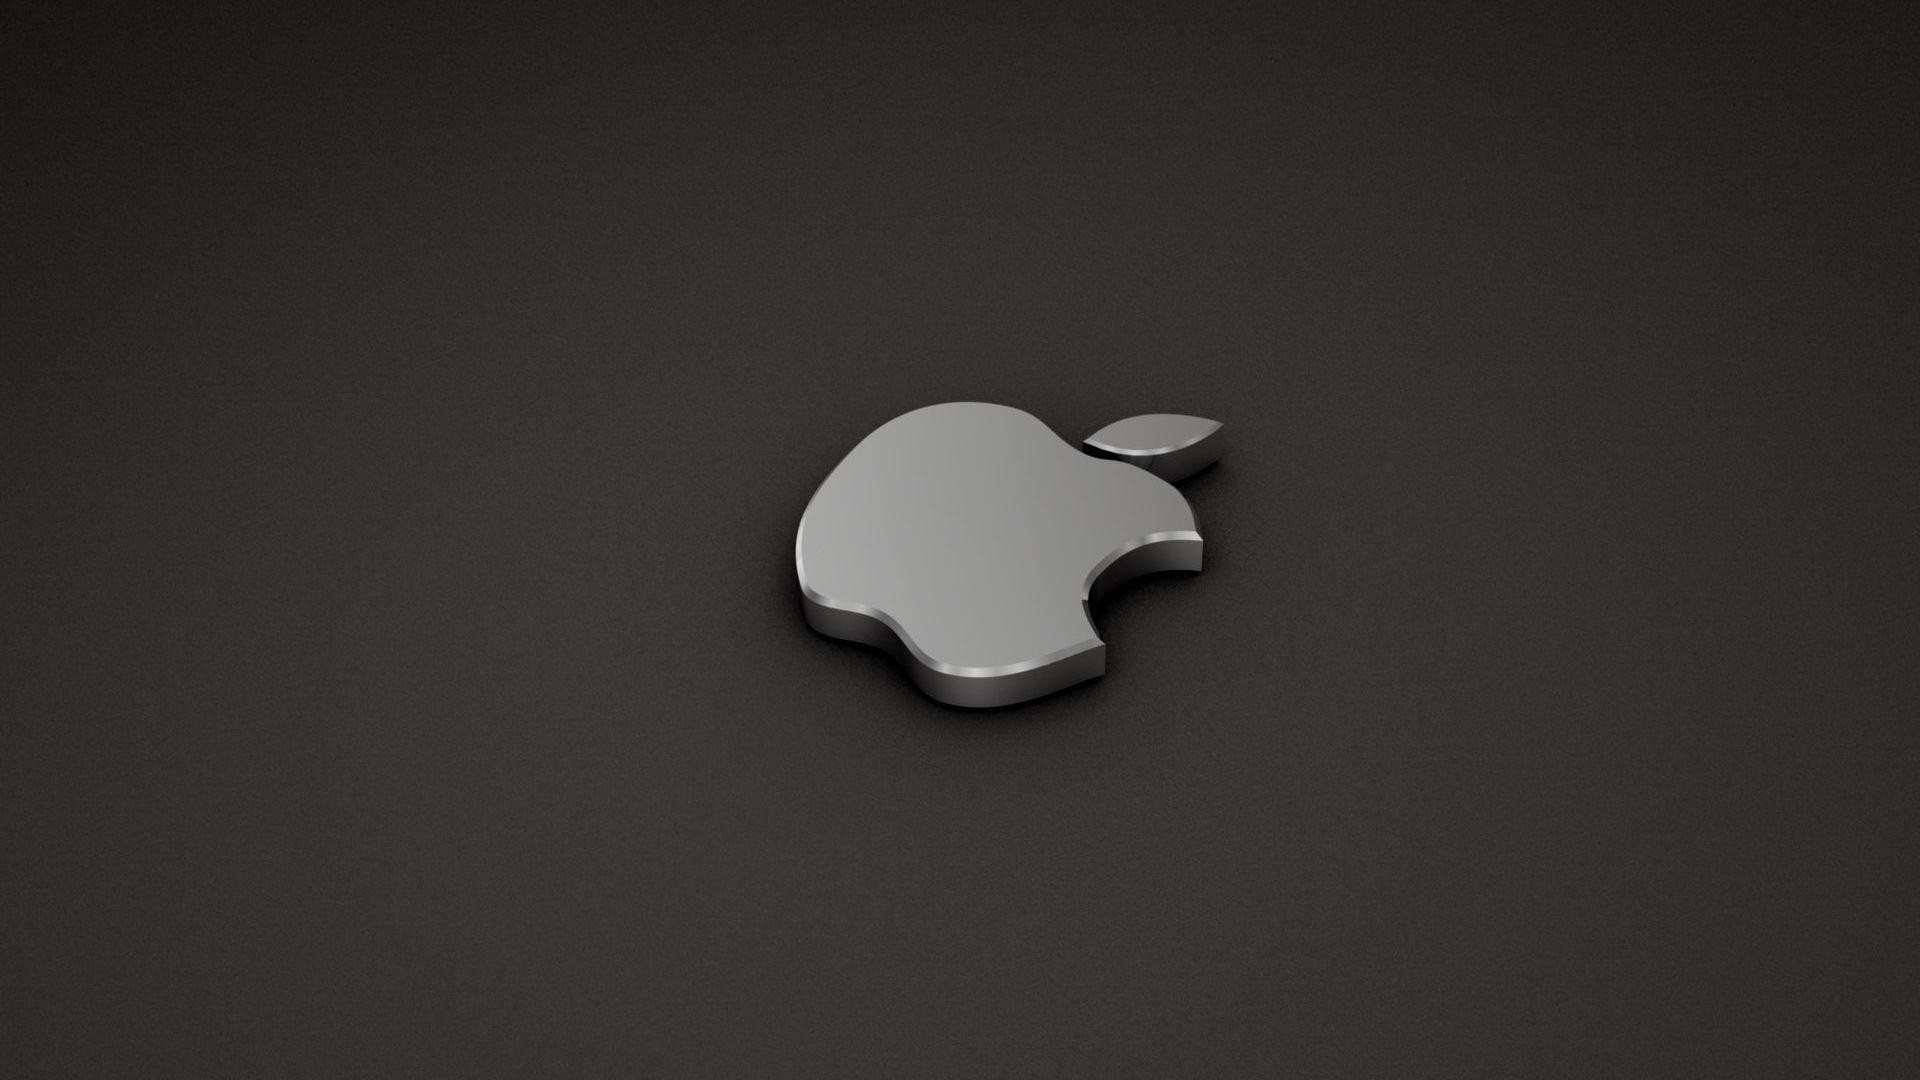 3D Black and White Mac Apple Logo HD Wallpaper